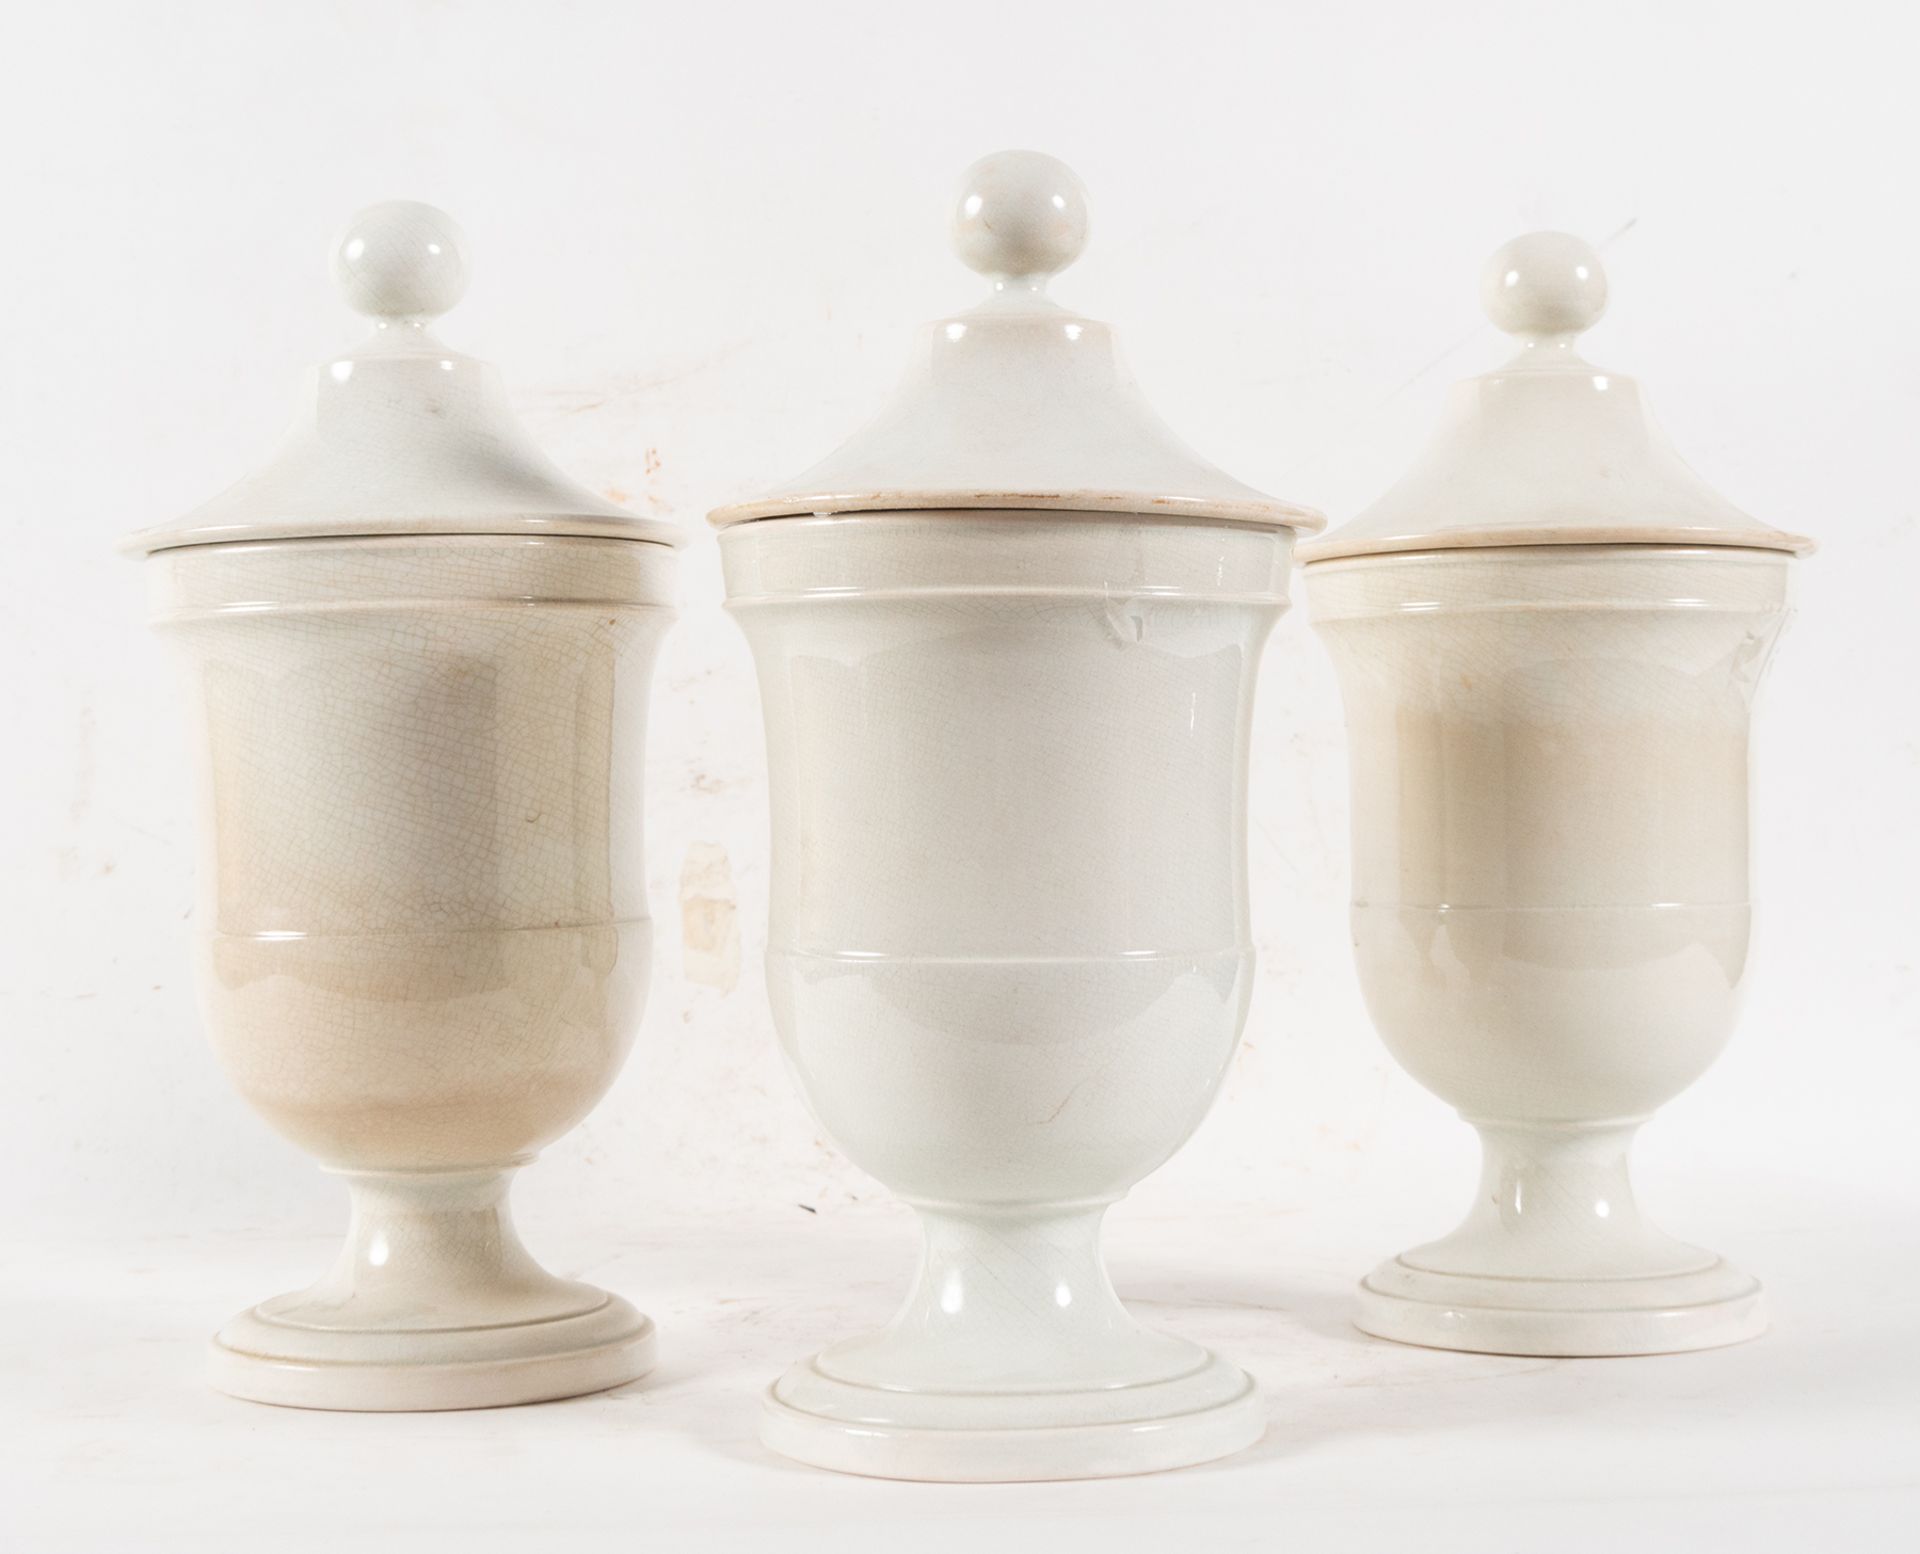 Set of three glazed ceramic pharmacy jars, 19th century - Image 2 of 2